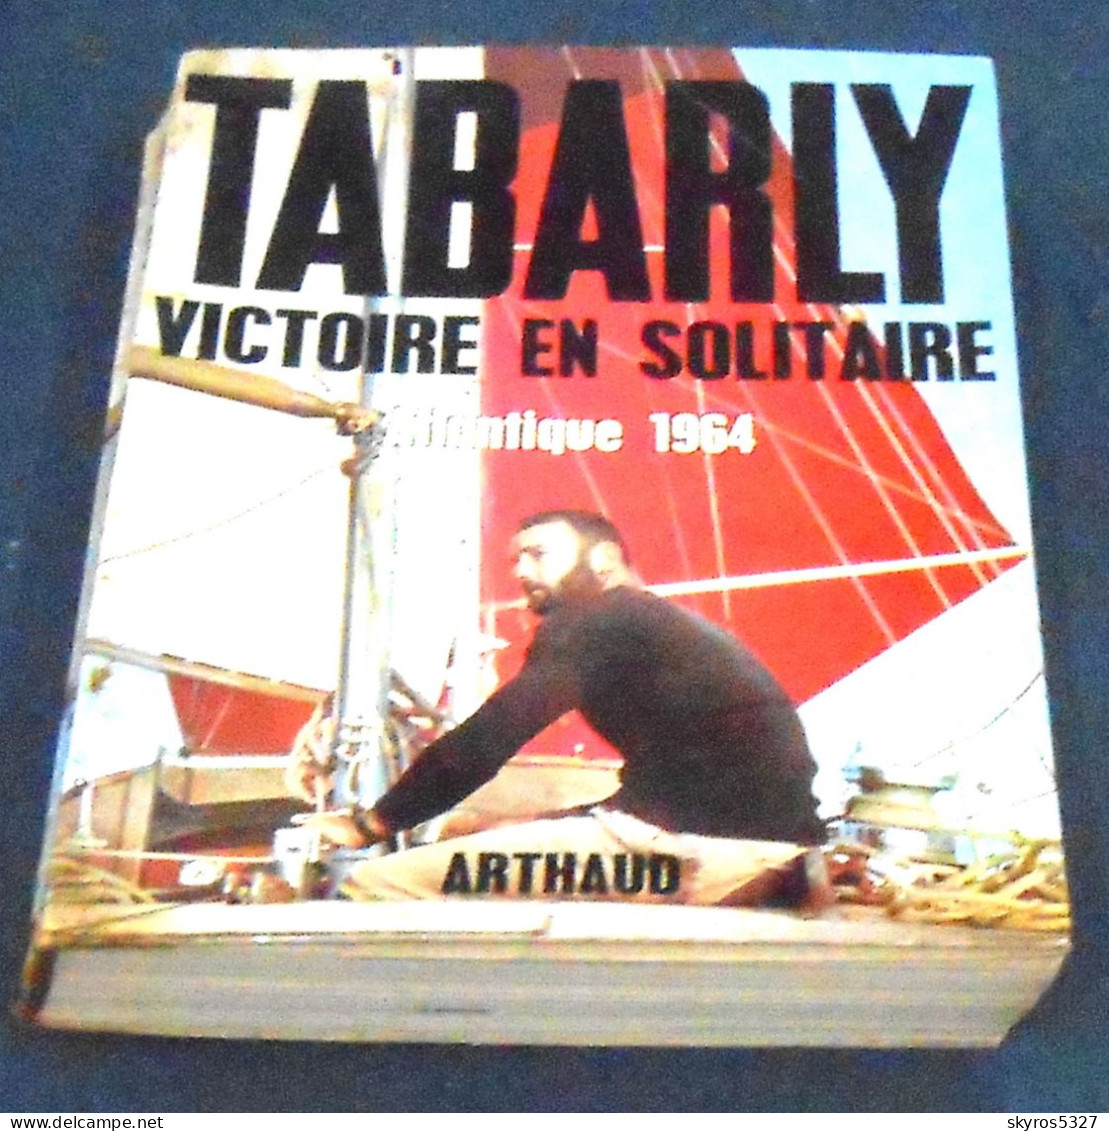 Victoire En Solitaire Atlantique 1964 - Eric Tabarly - Boats